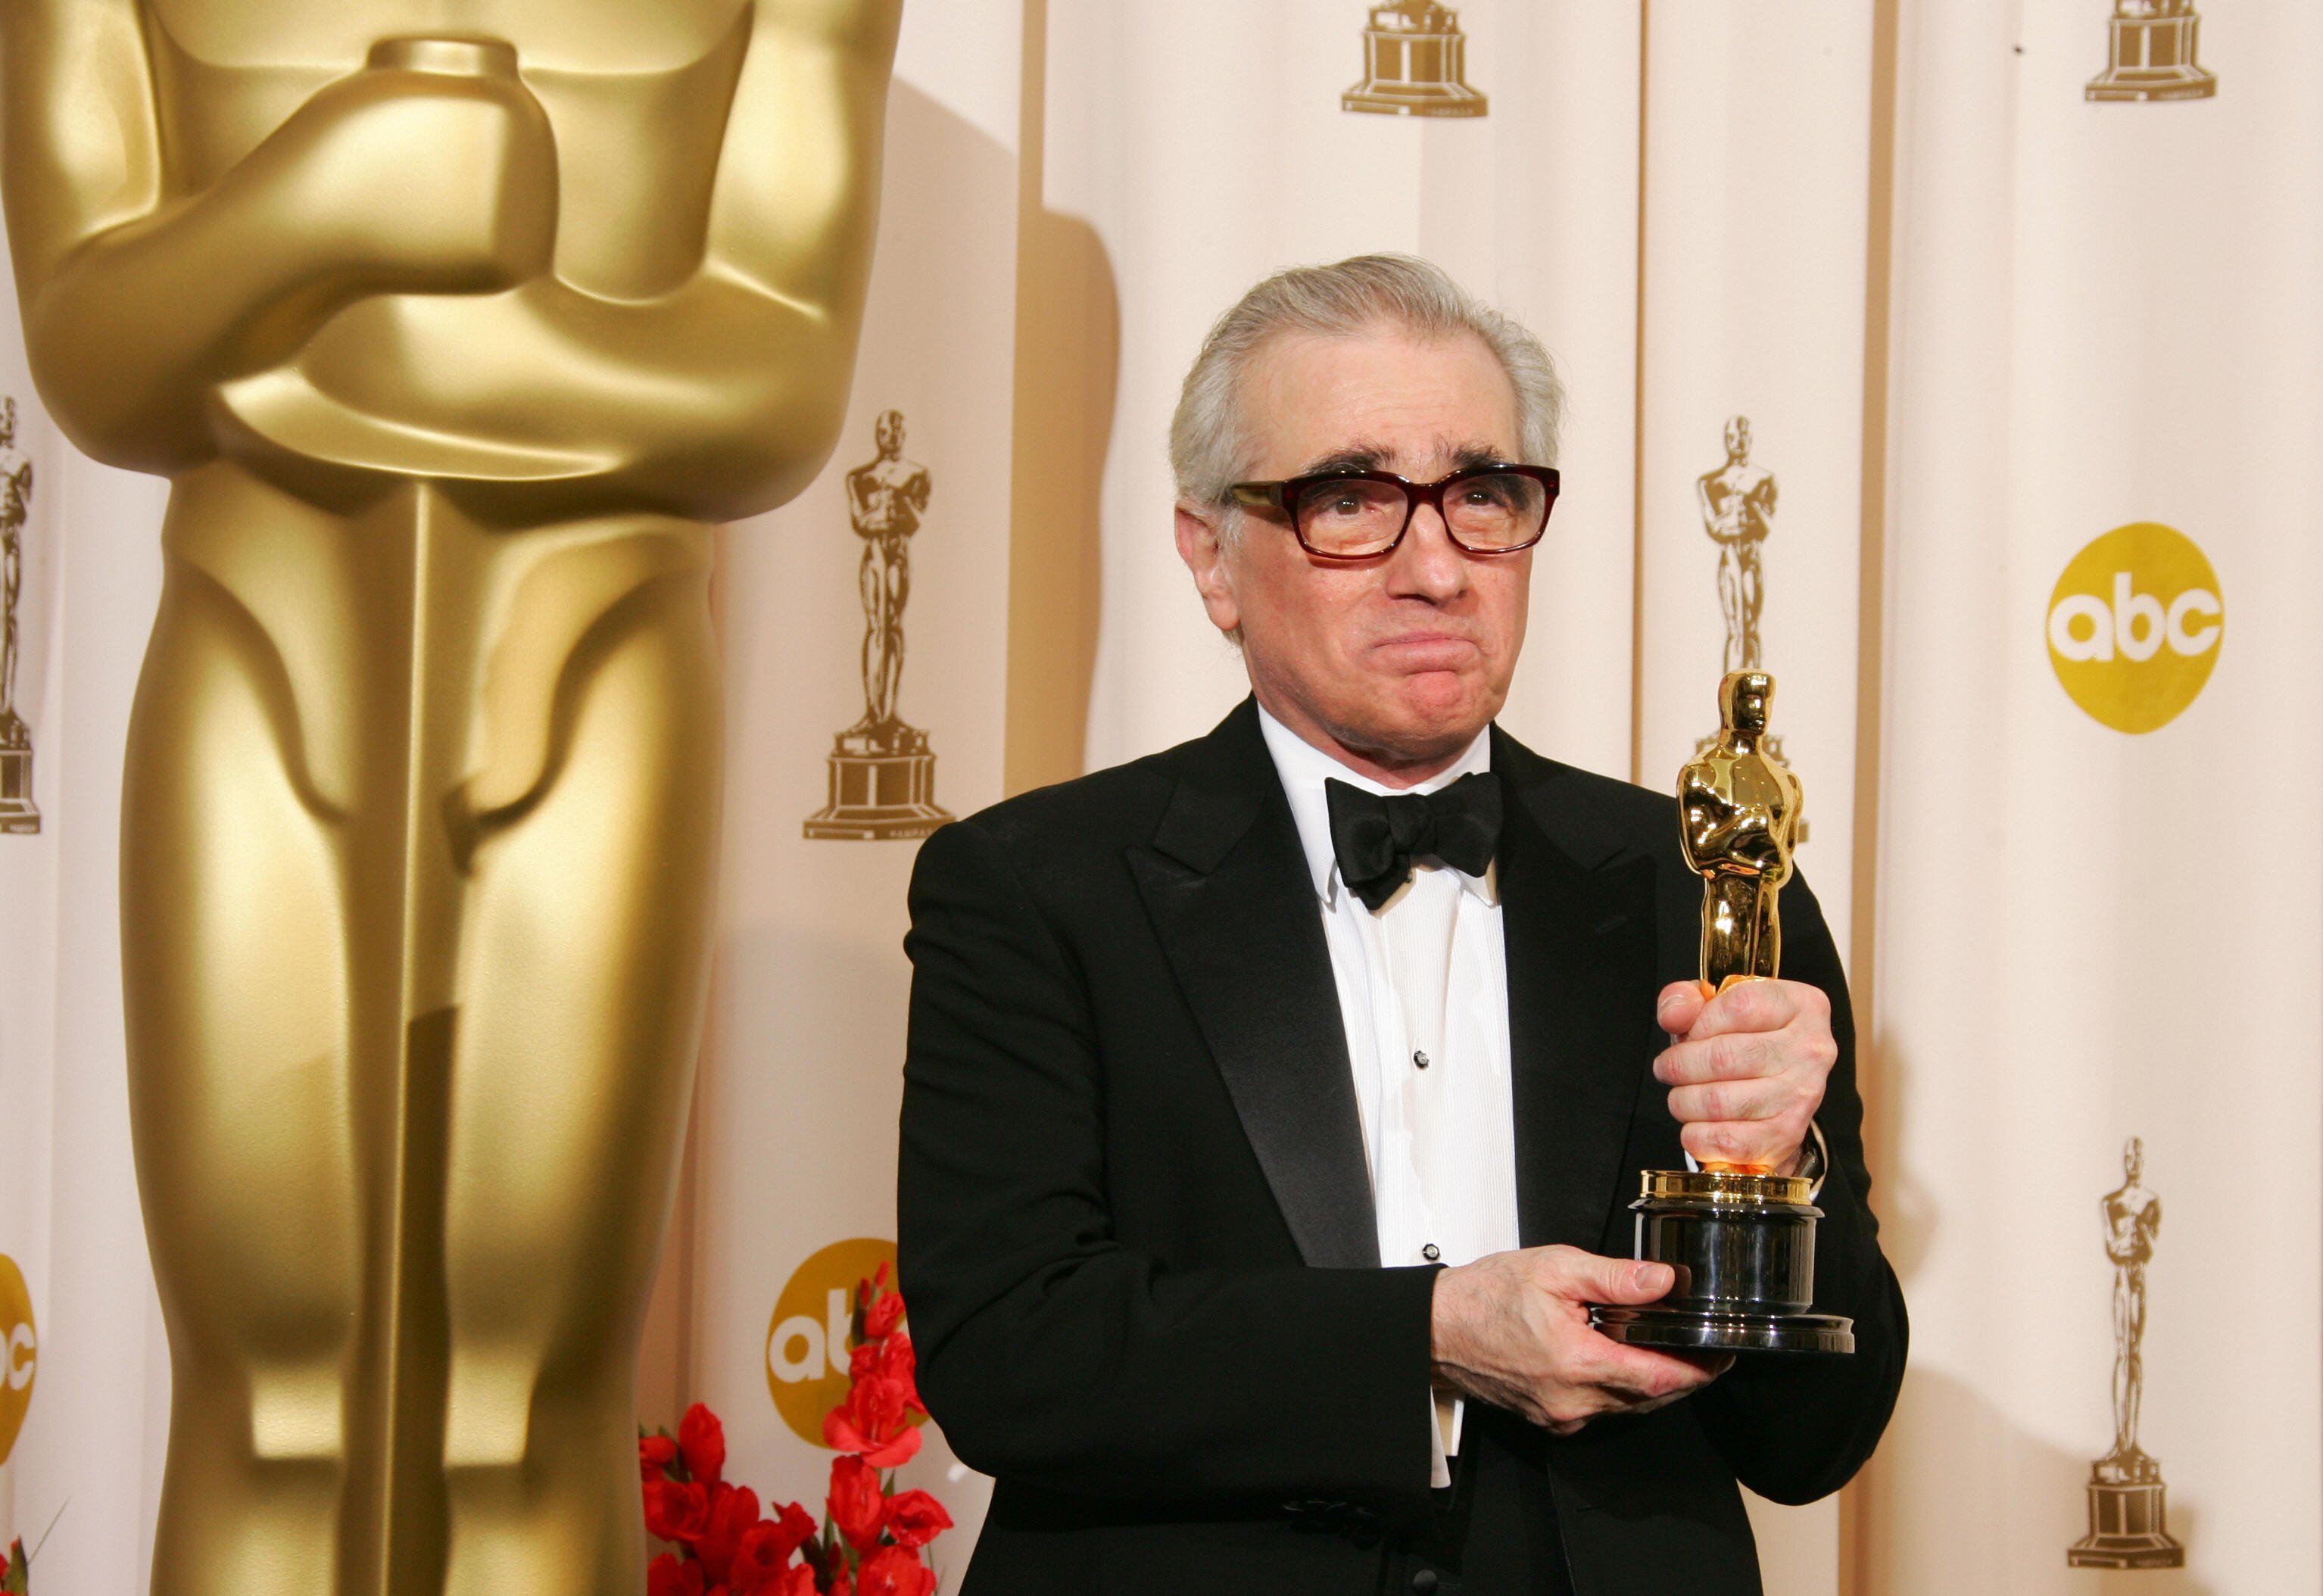 Martin Scorsese's net worth was already high before he won an Oscar for best director.